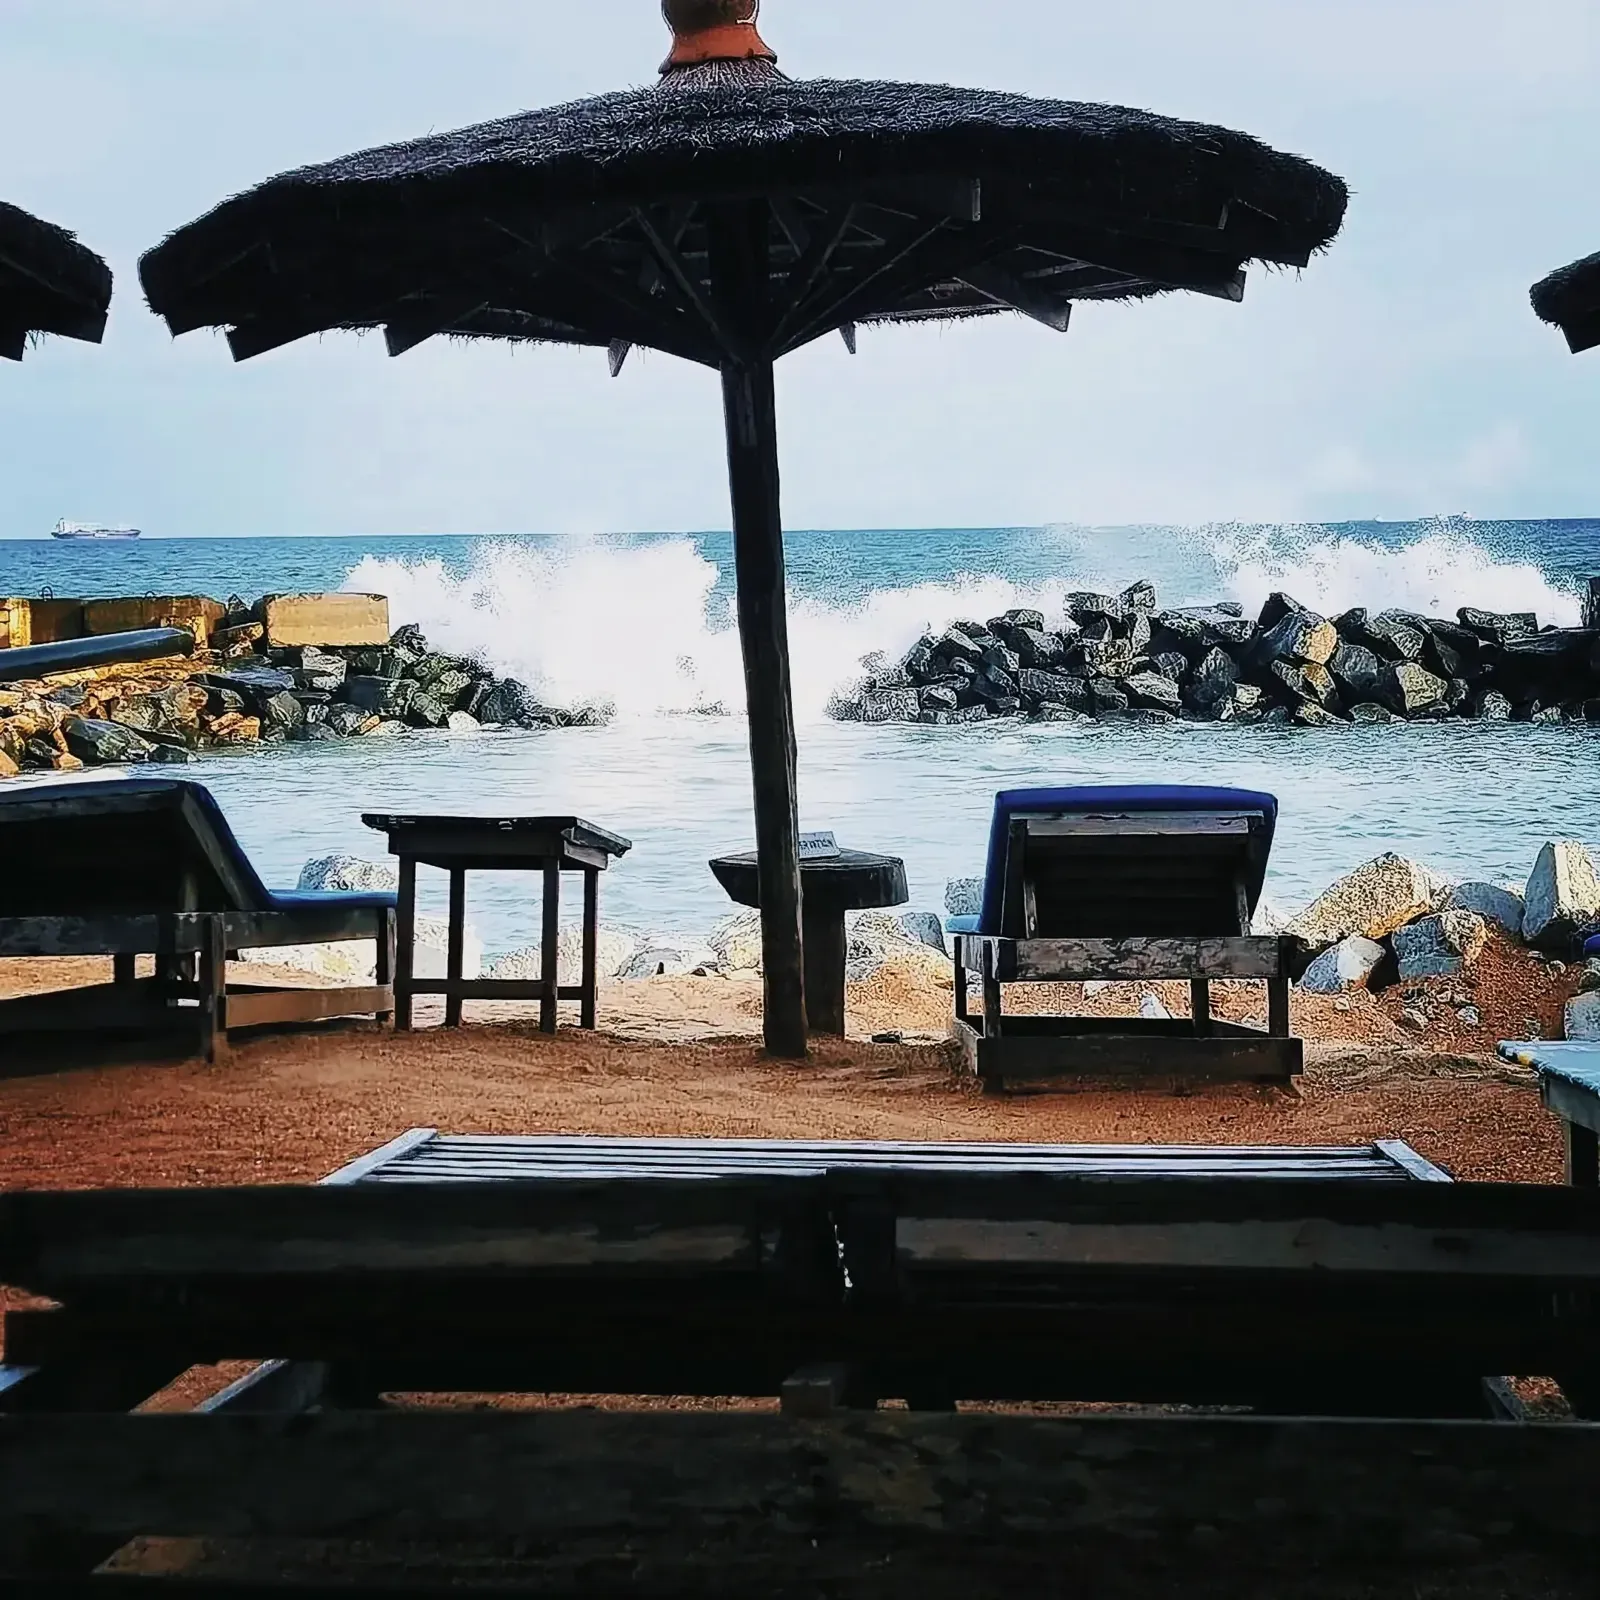 Serene beach with beach chairs and umbrellas